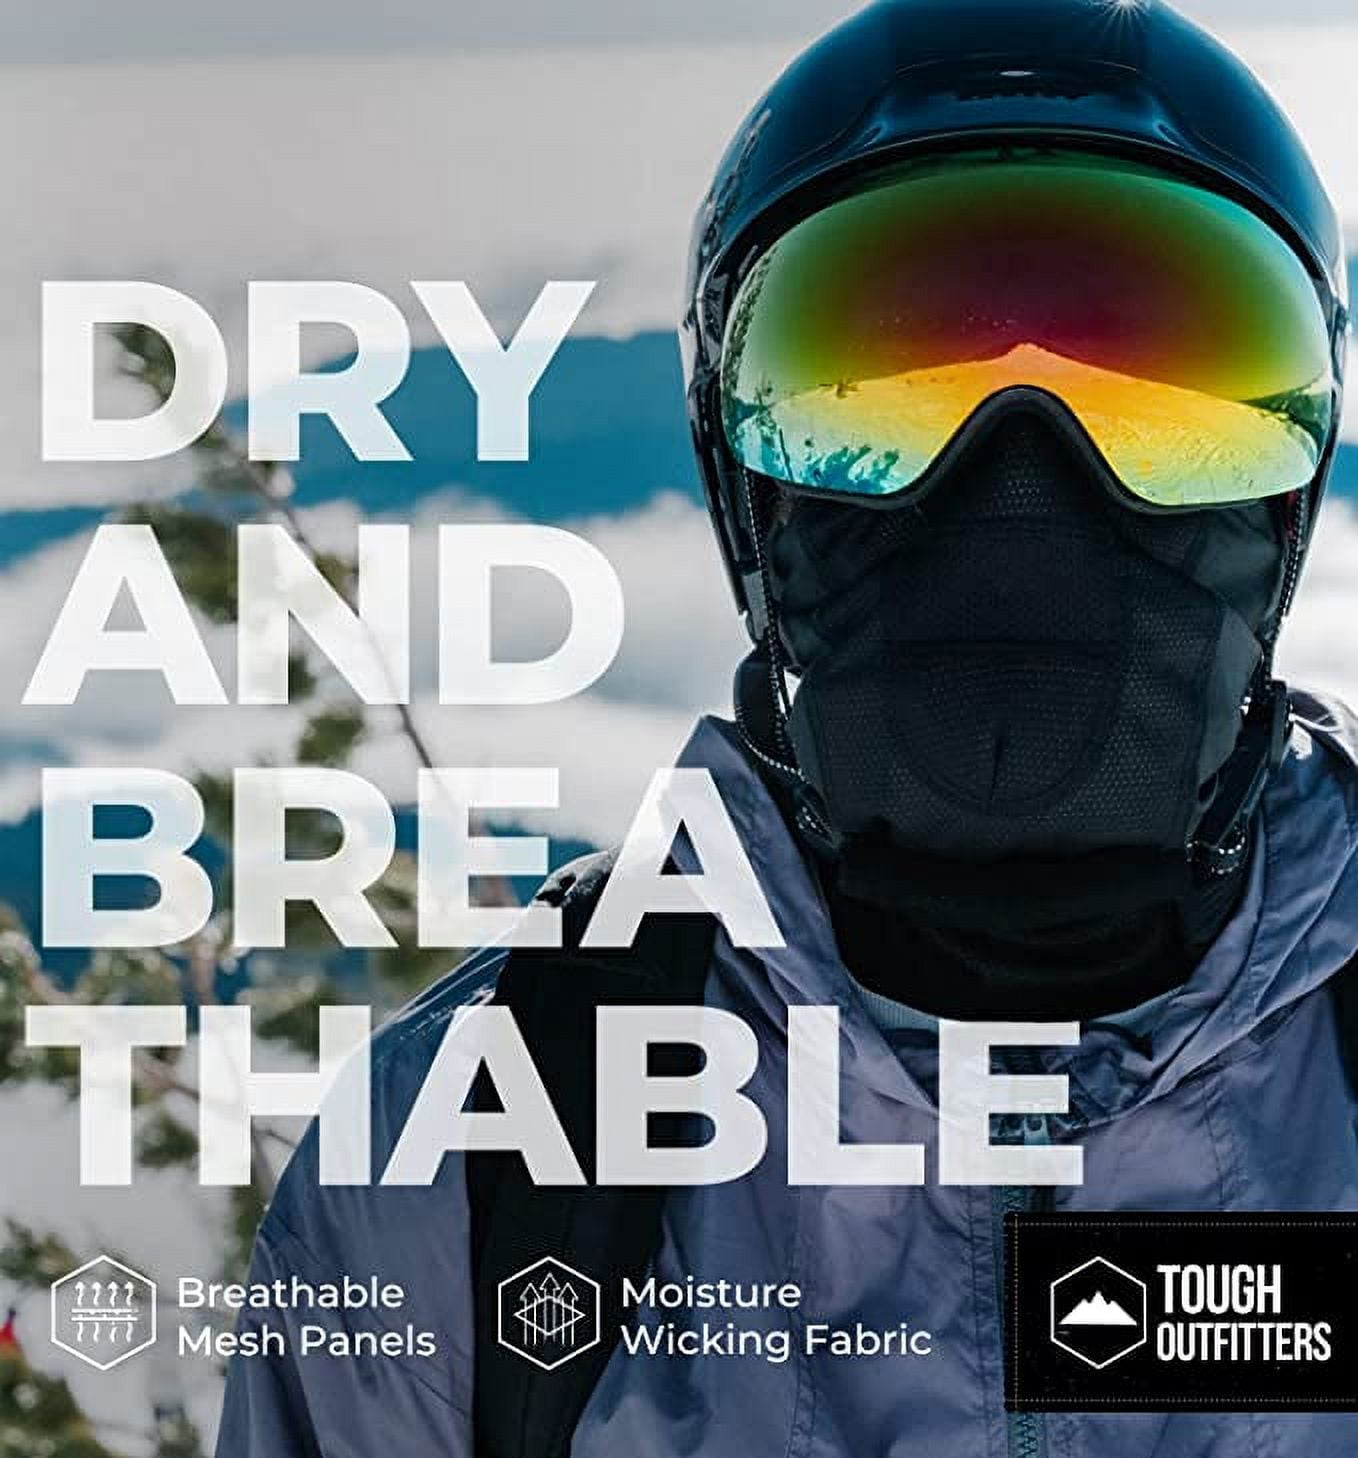 Tough Headwear Neoprene Ski Mask - Tactical Winter Face Mask - Perfect